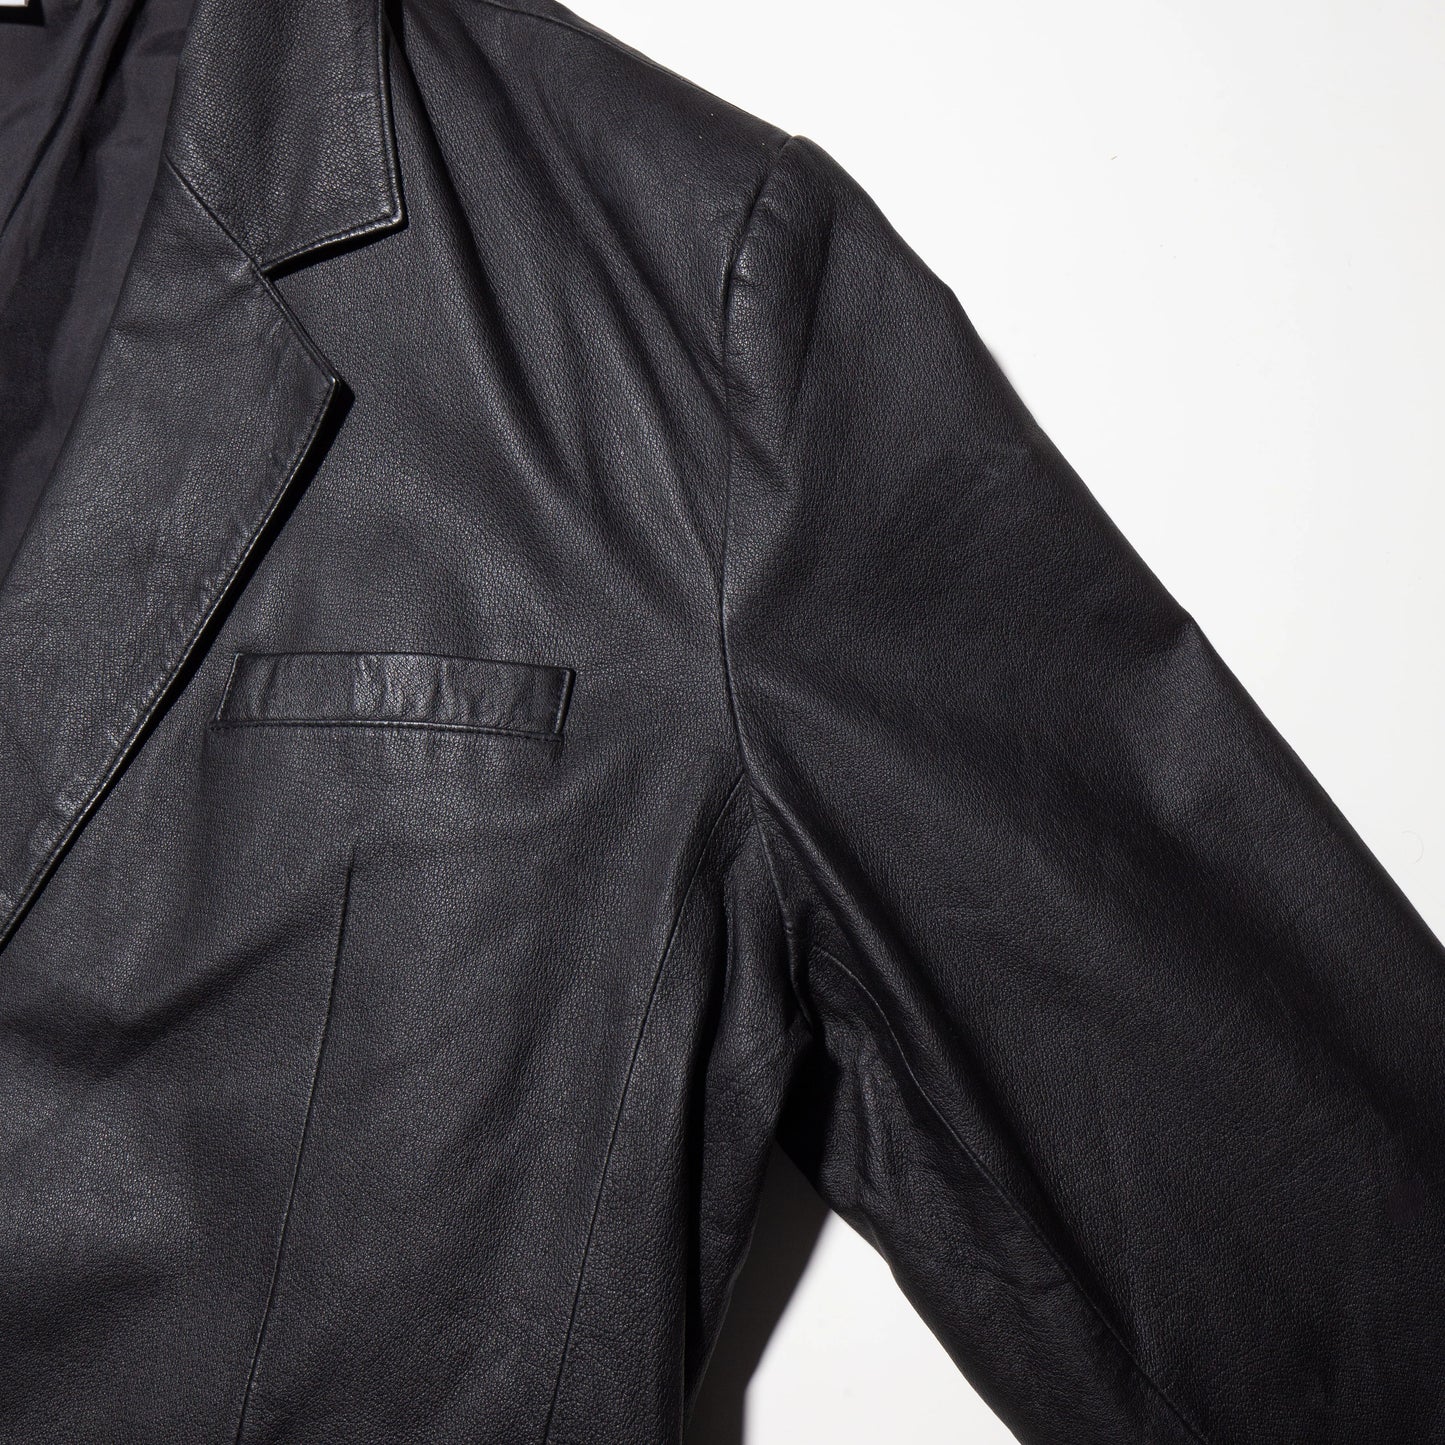 vintage oversized leather tailored jacket